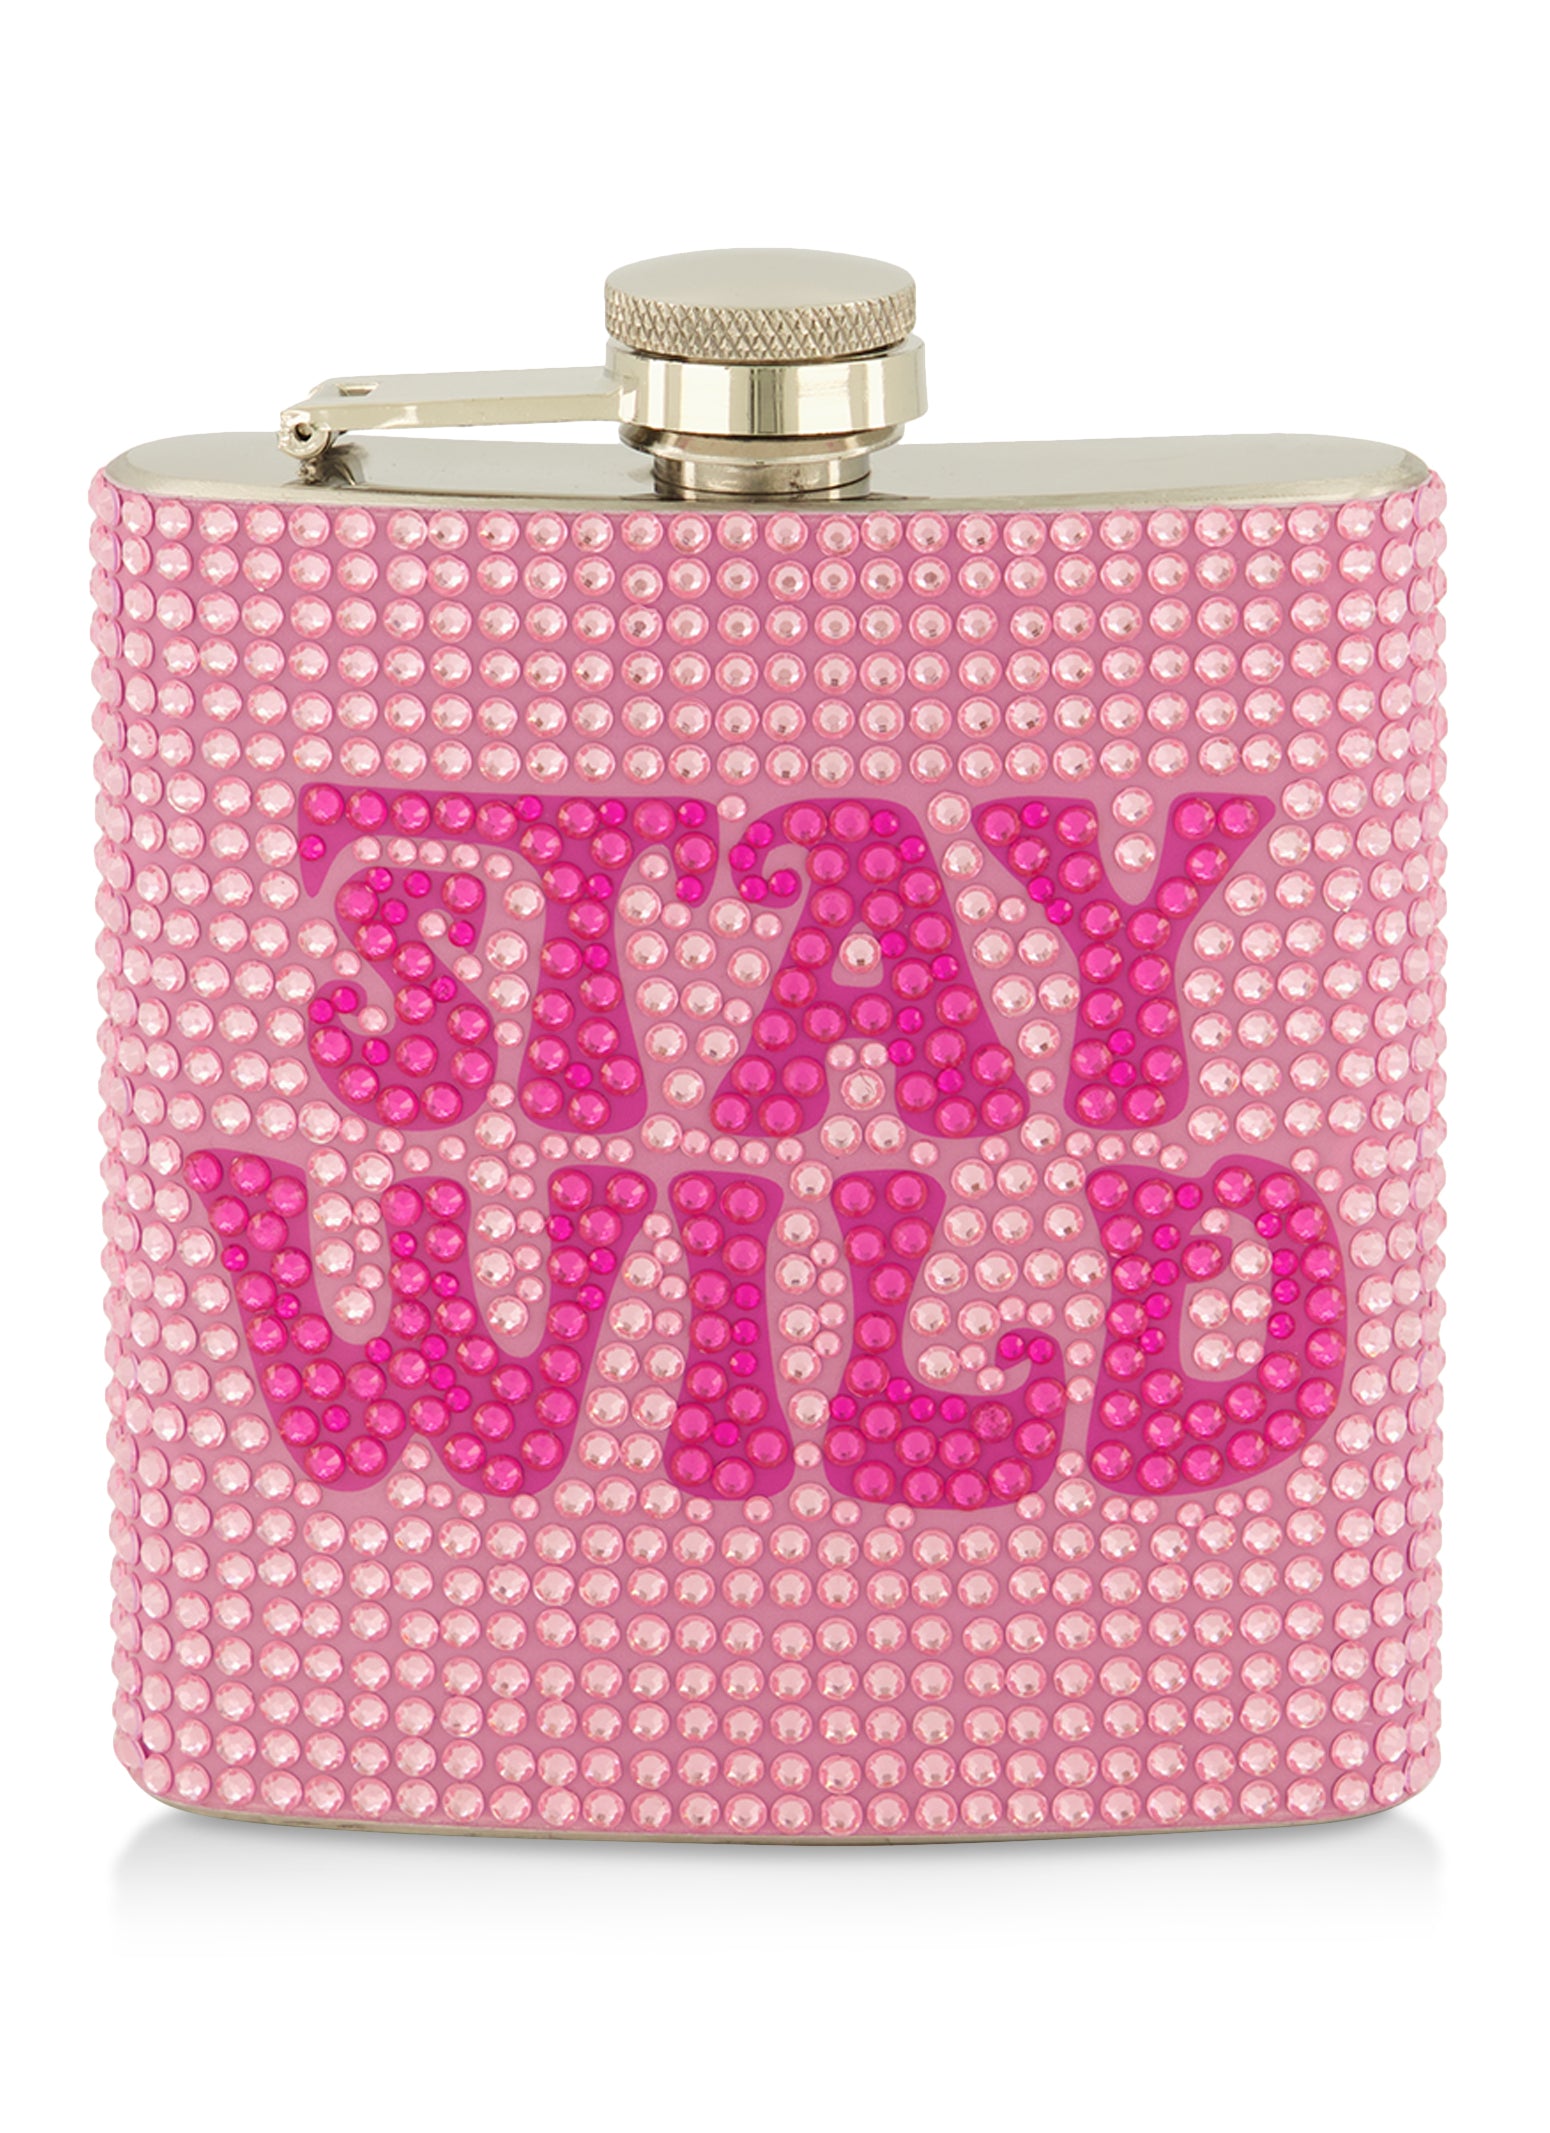 Stay Wild Rhinestone Studded Flask, Pink